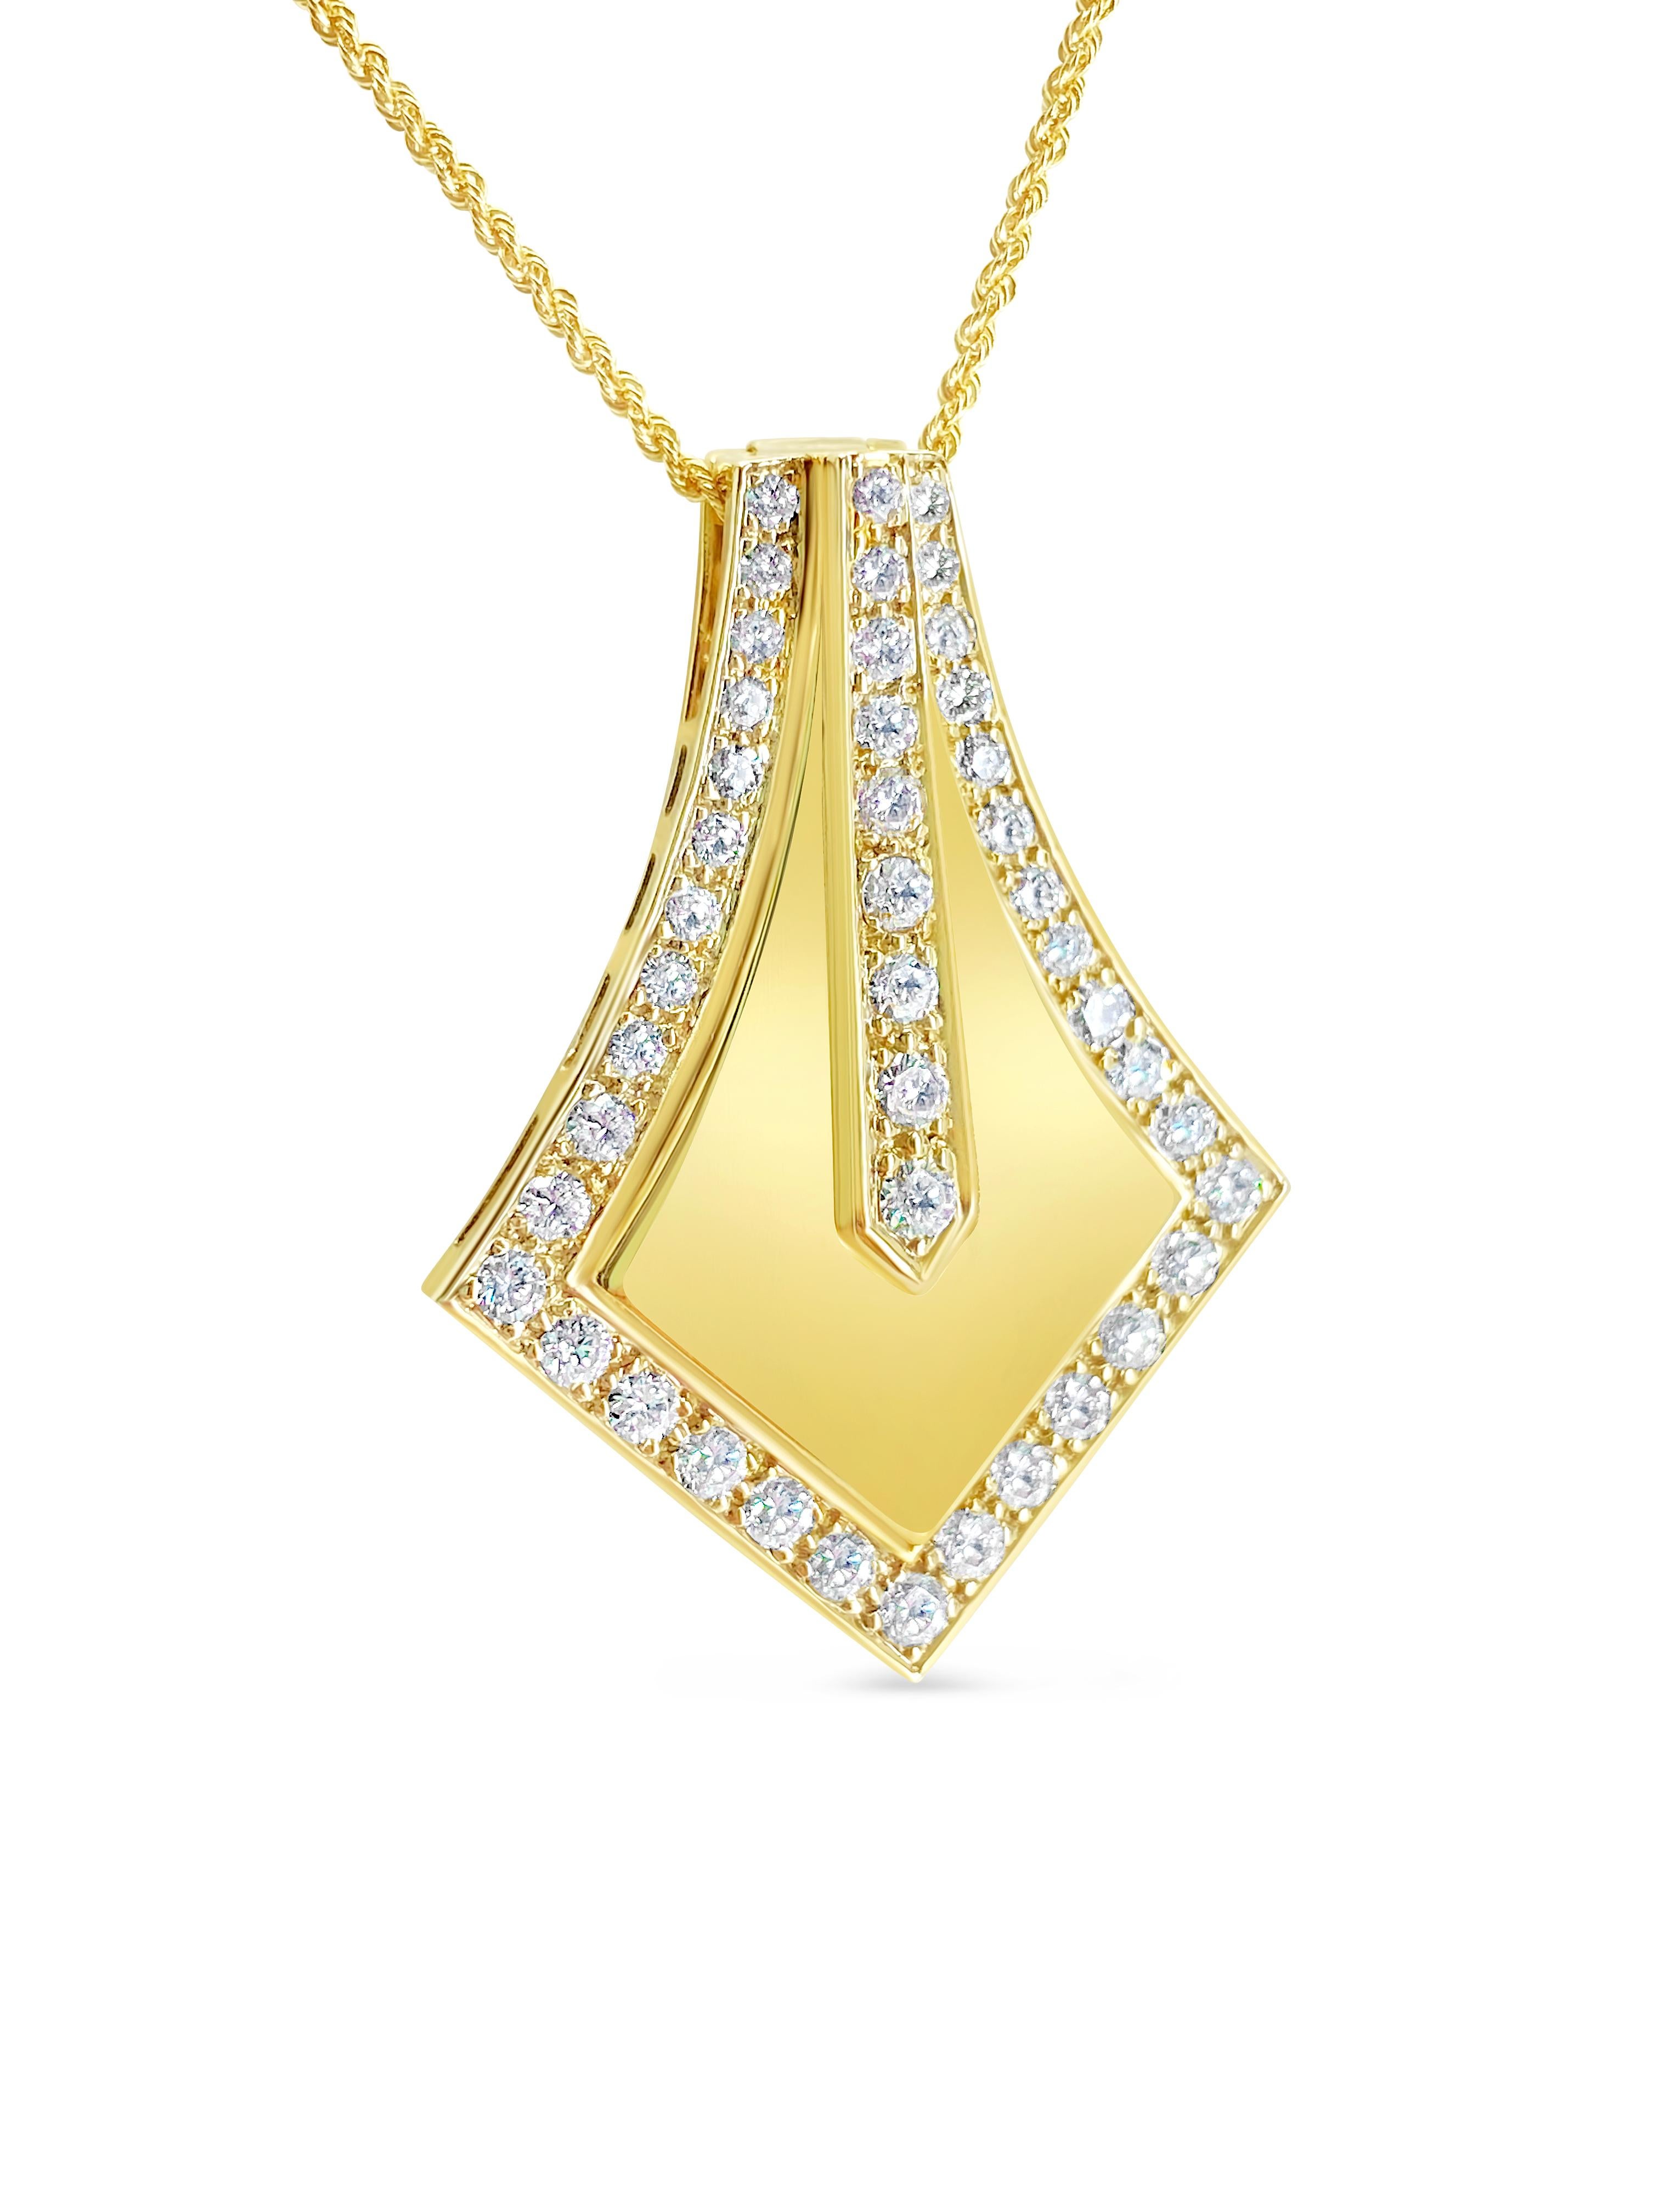 Medieval Vintage 3.04 Carat Diamond Pendant For Her For Sale